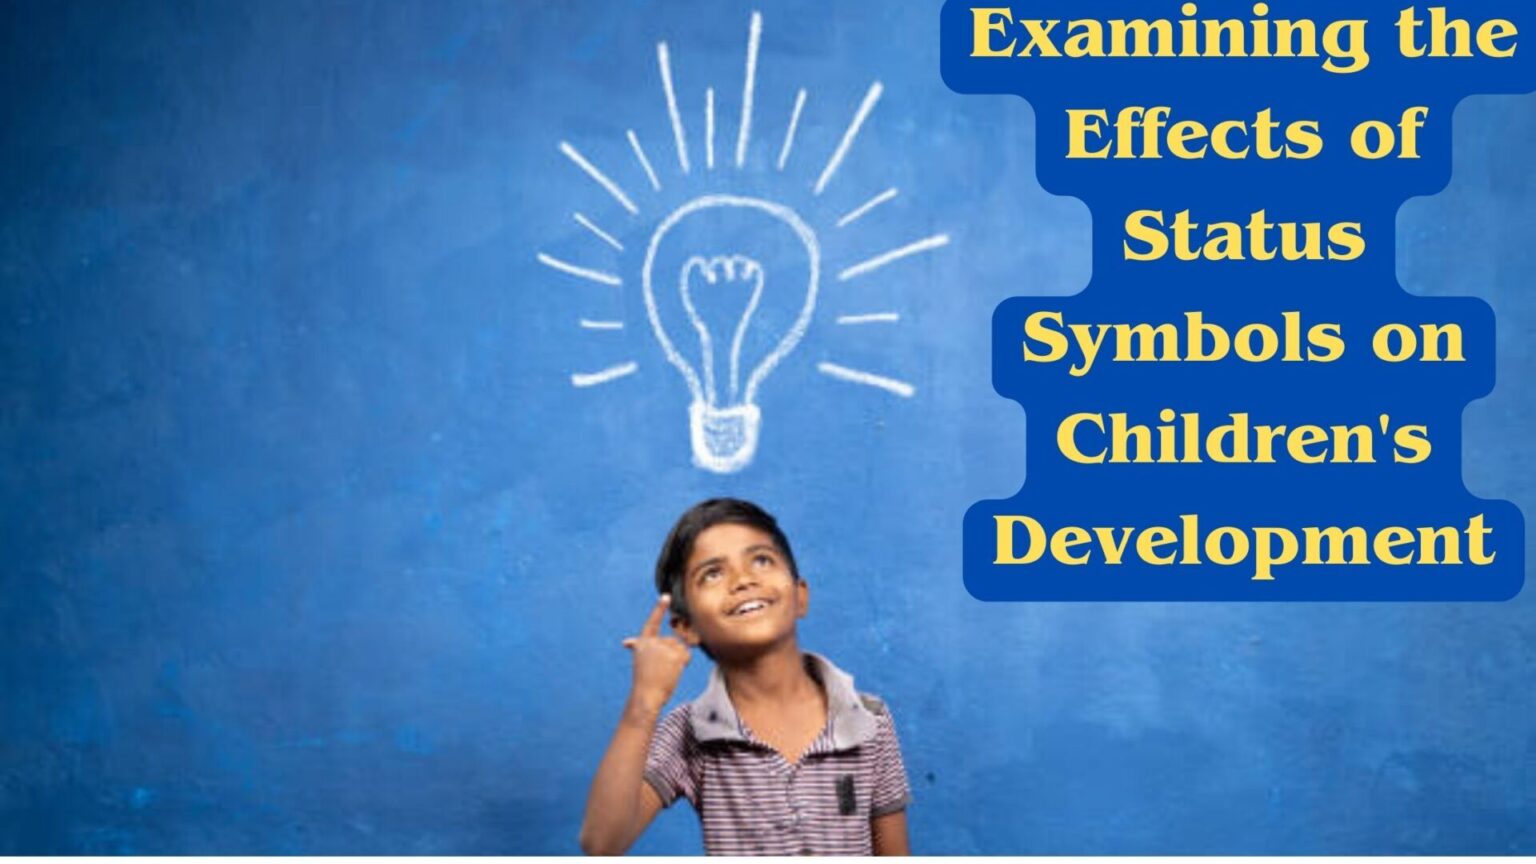 Examining the Effects of Status Symbols on Children's Development